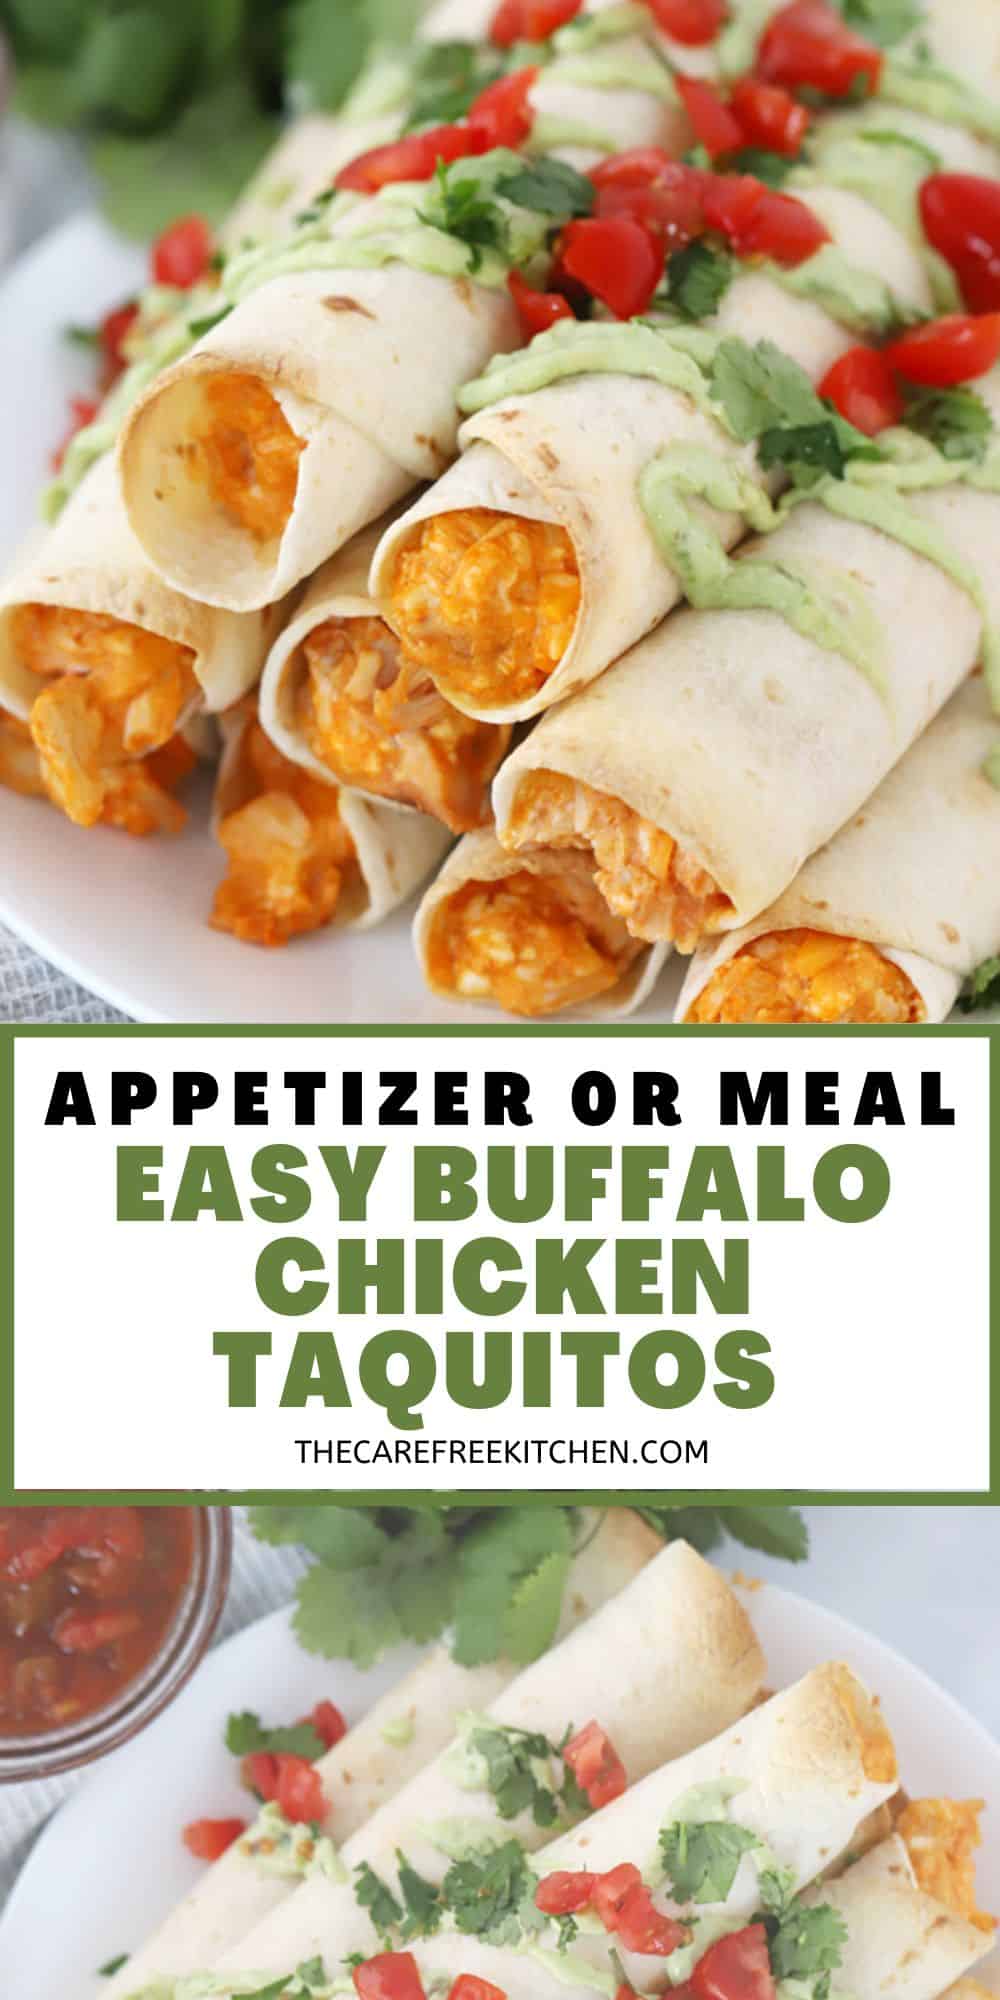 Easy Buffalo Chicken Taquitos Recipe - The Carefree Kitchen